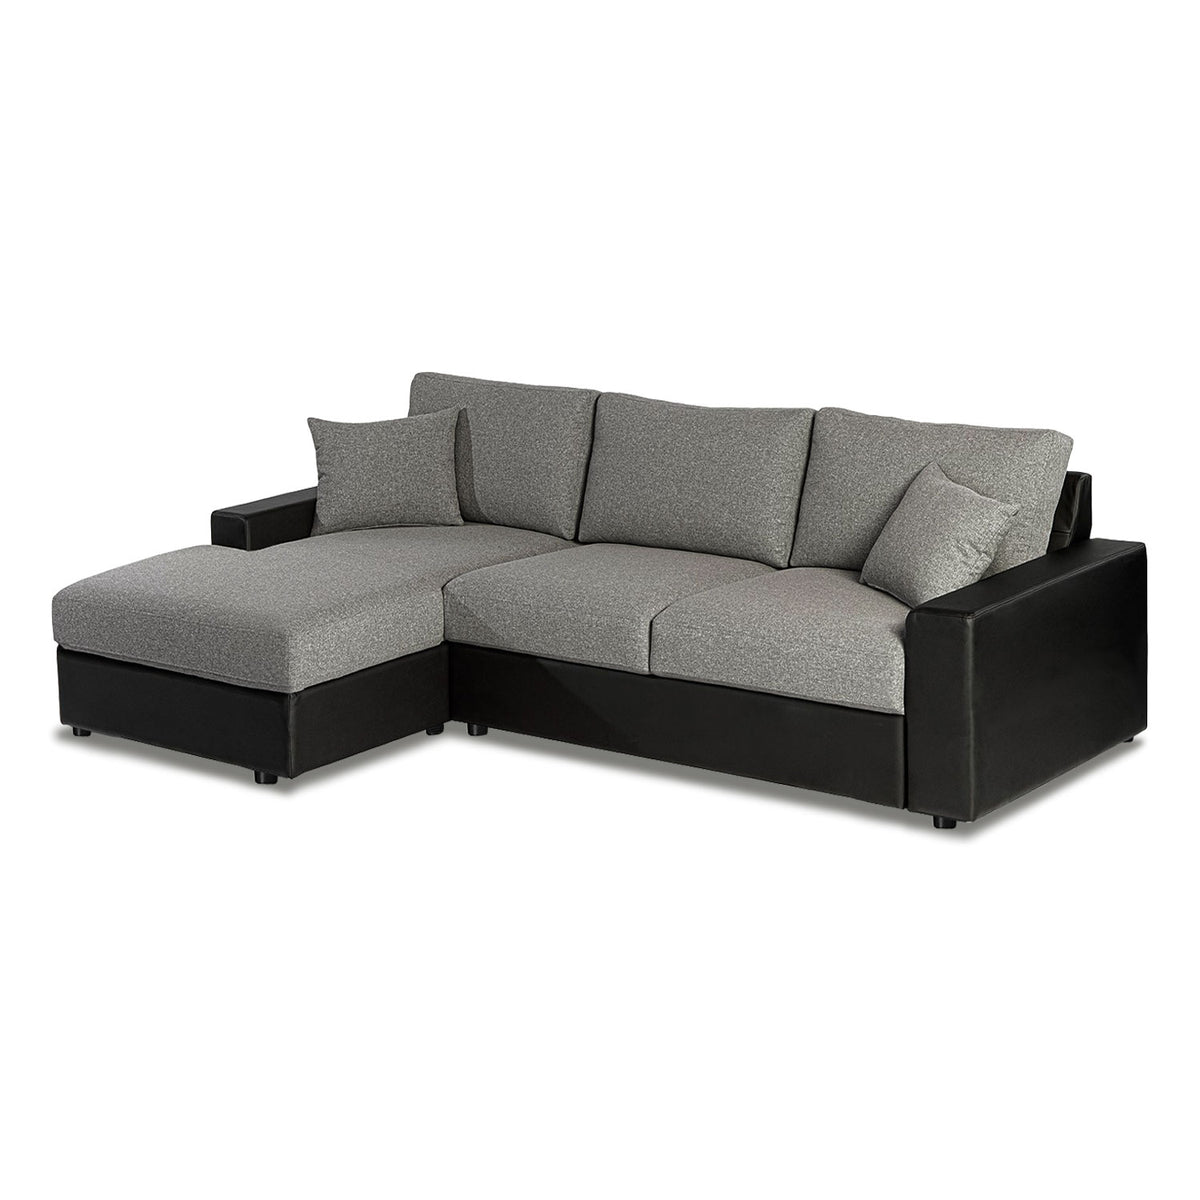 Mason Lounger Sofa